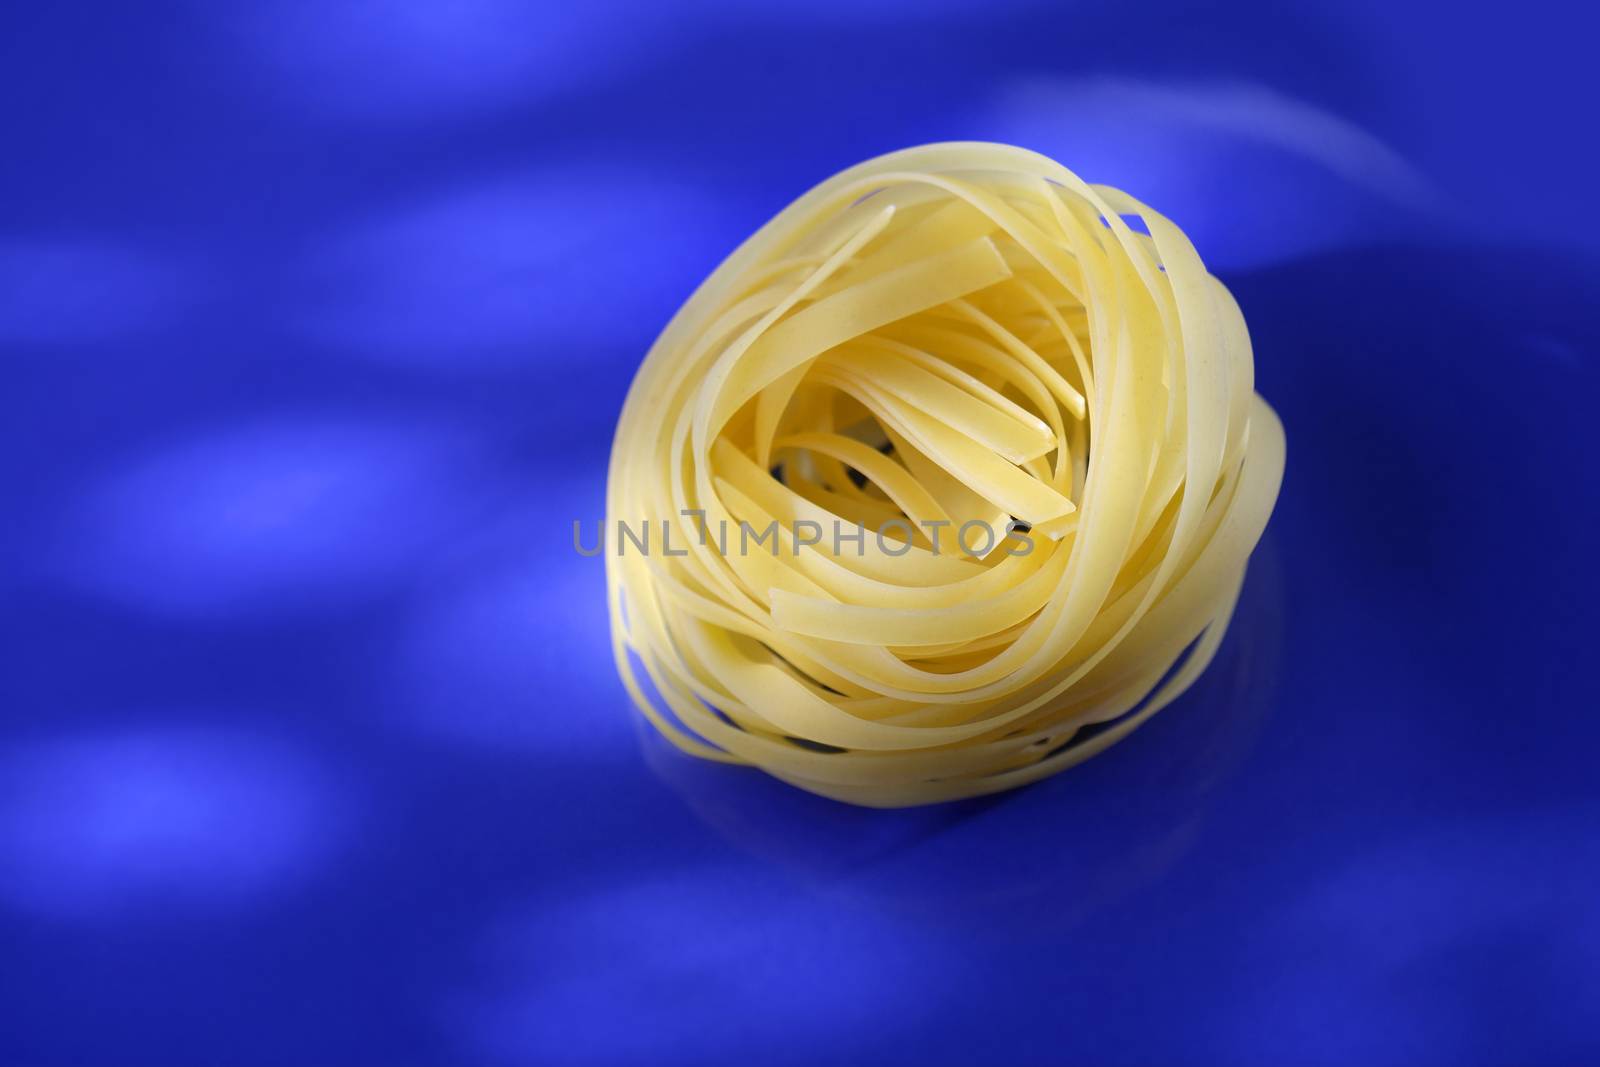 Uncooked pasta tagliatelle on a blue plate